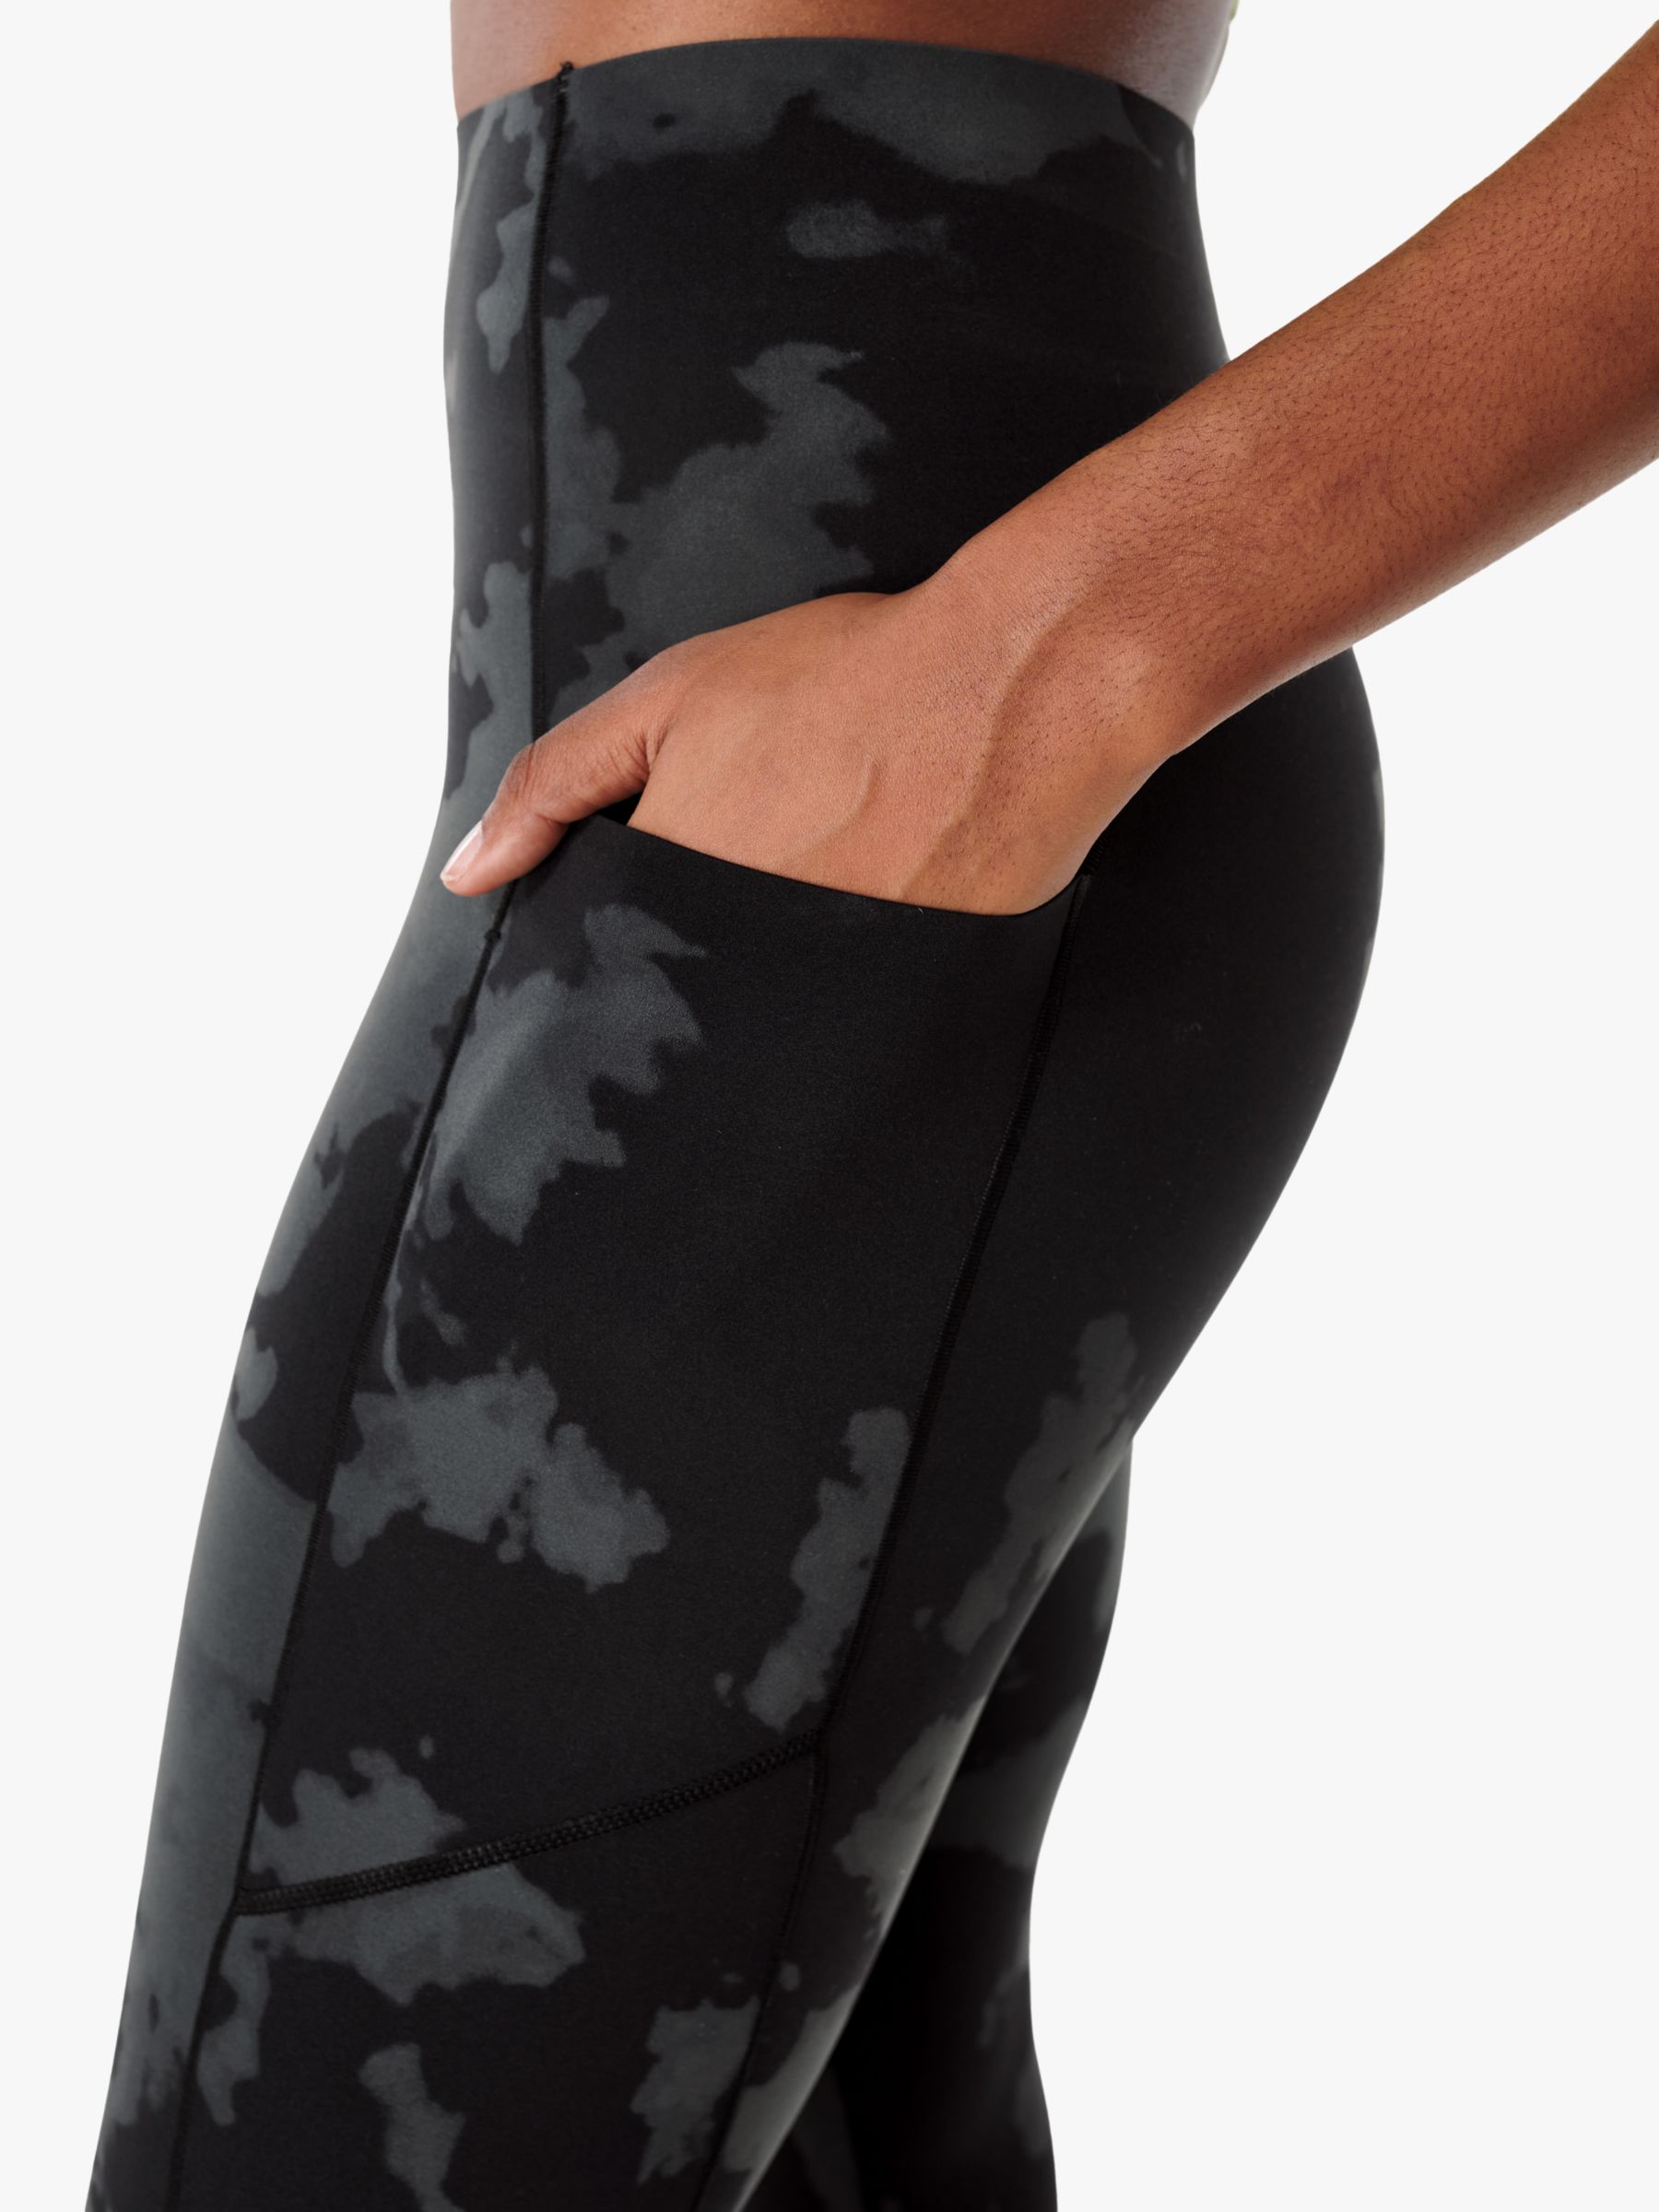 Power UltraSculpt High-Waisted Workout Leggings - Black Fade Print, Women's Leggings